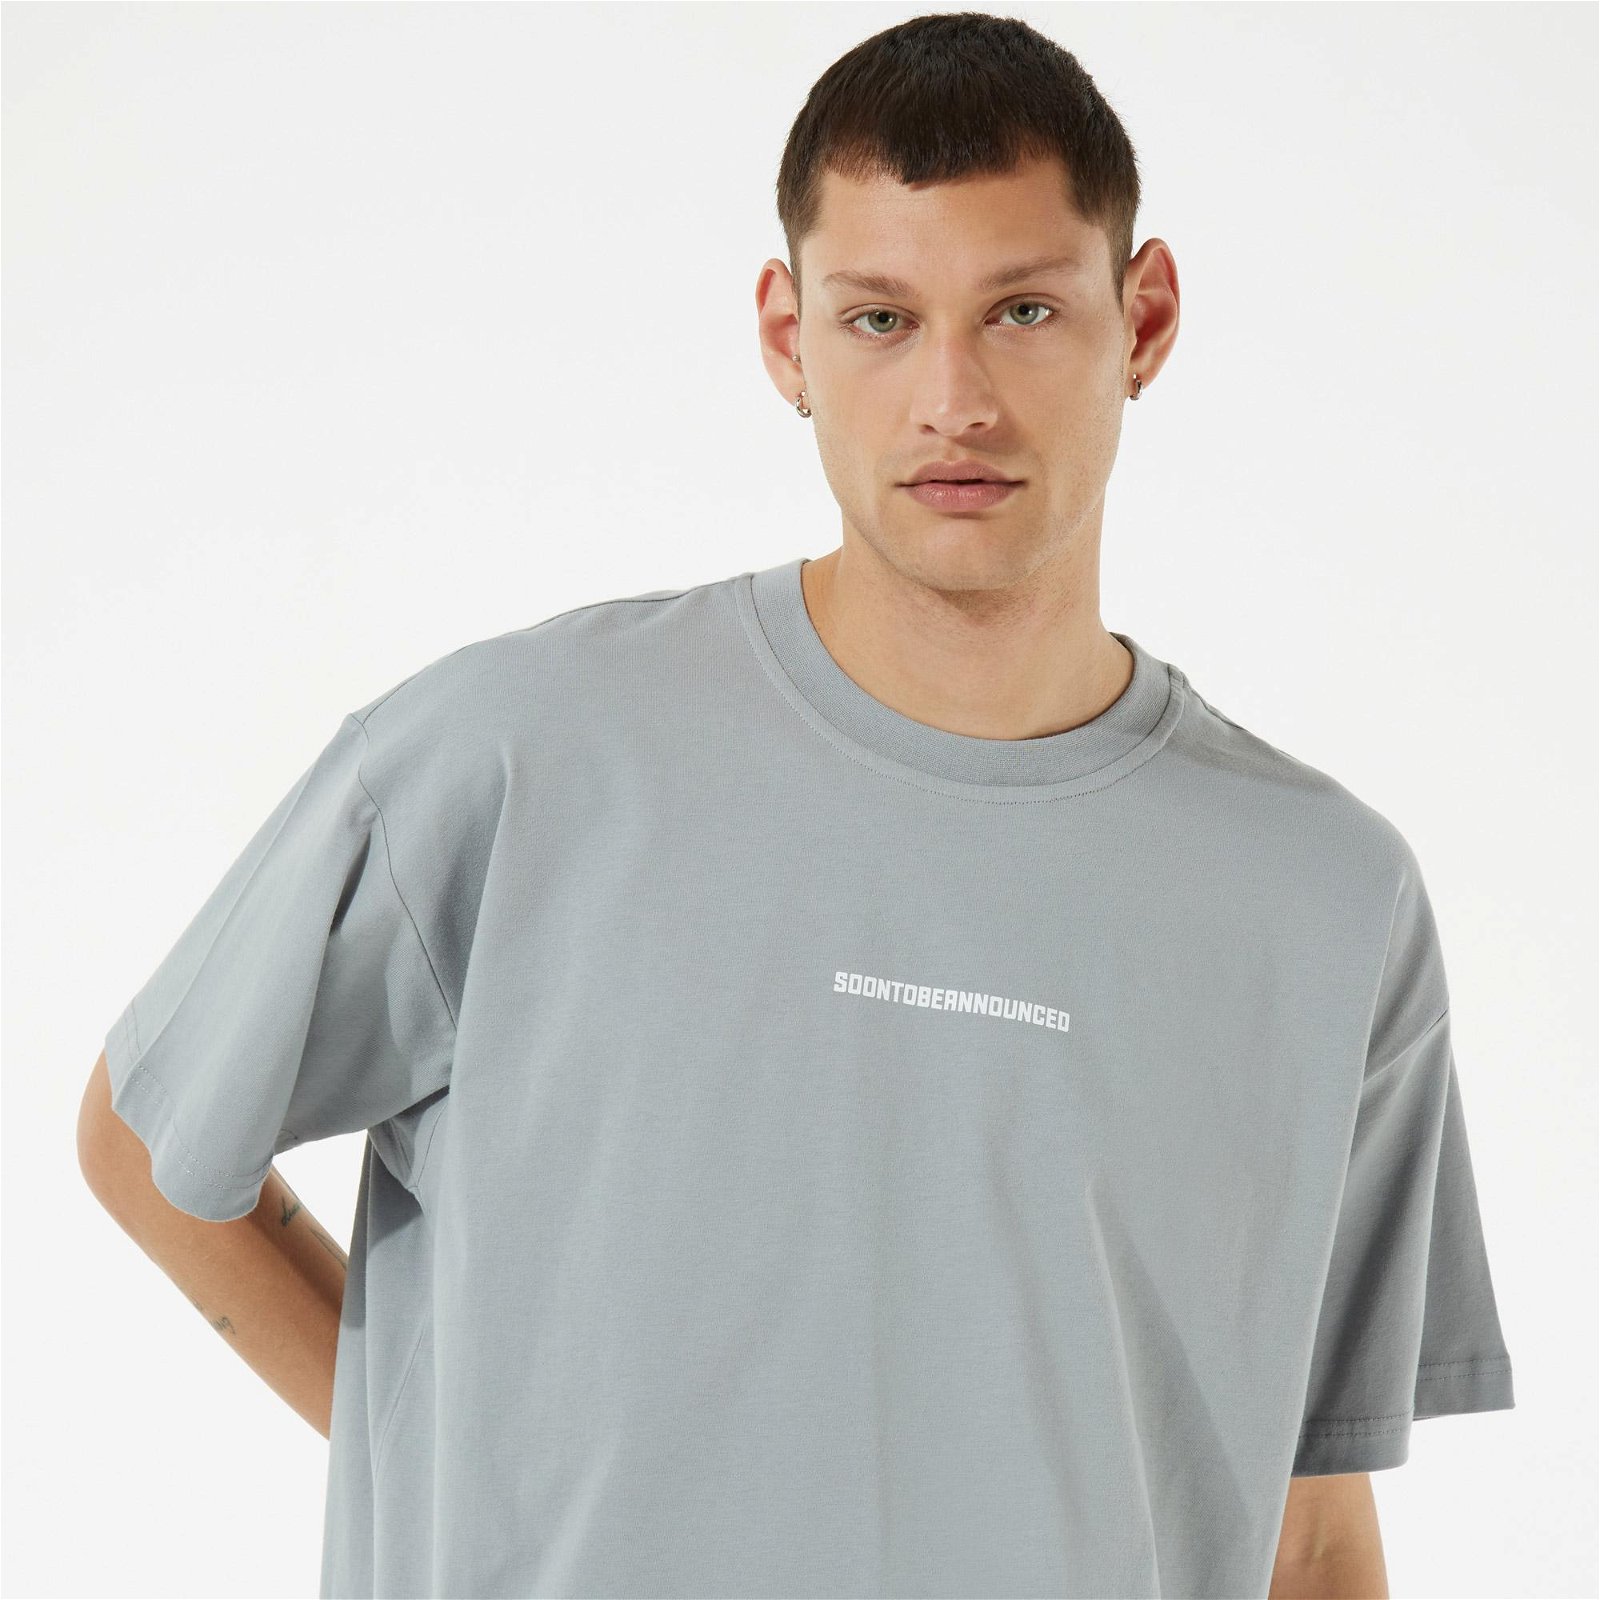 SOONTOBEANNOUNCED Logo Printed Unisex Gri T-Shirt